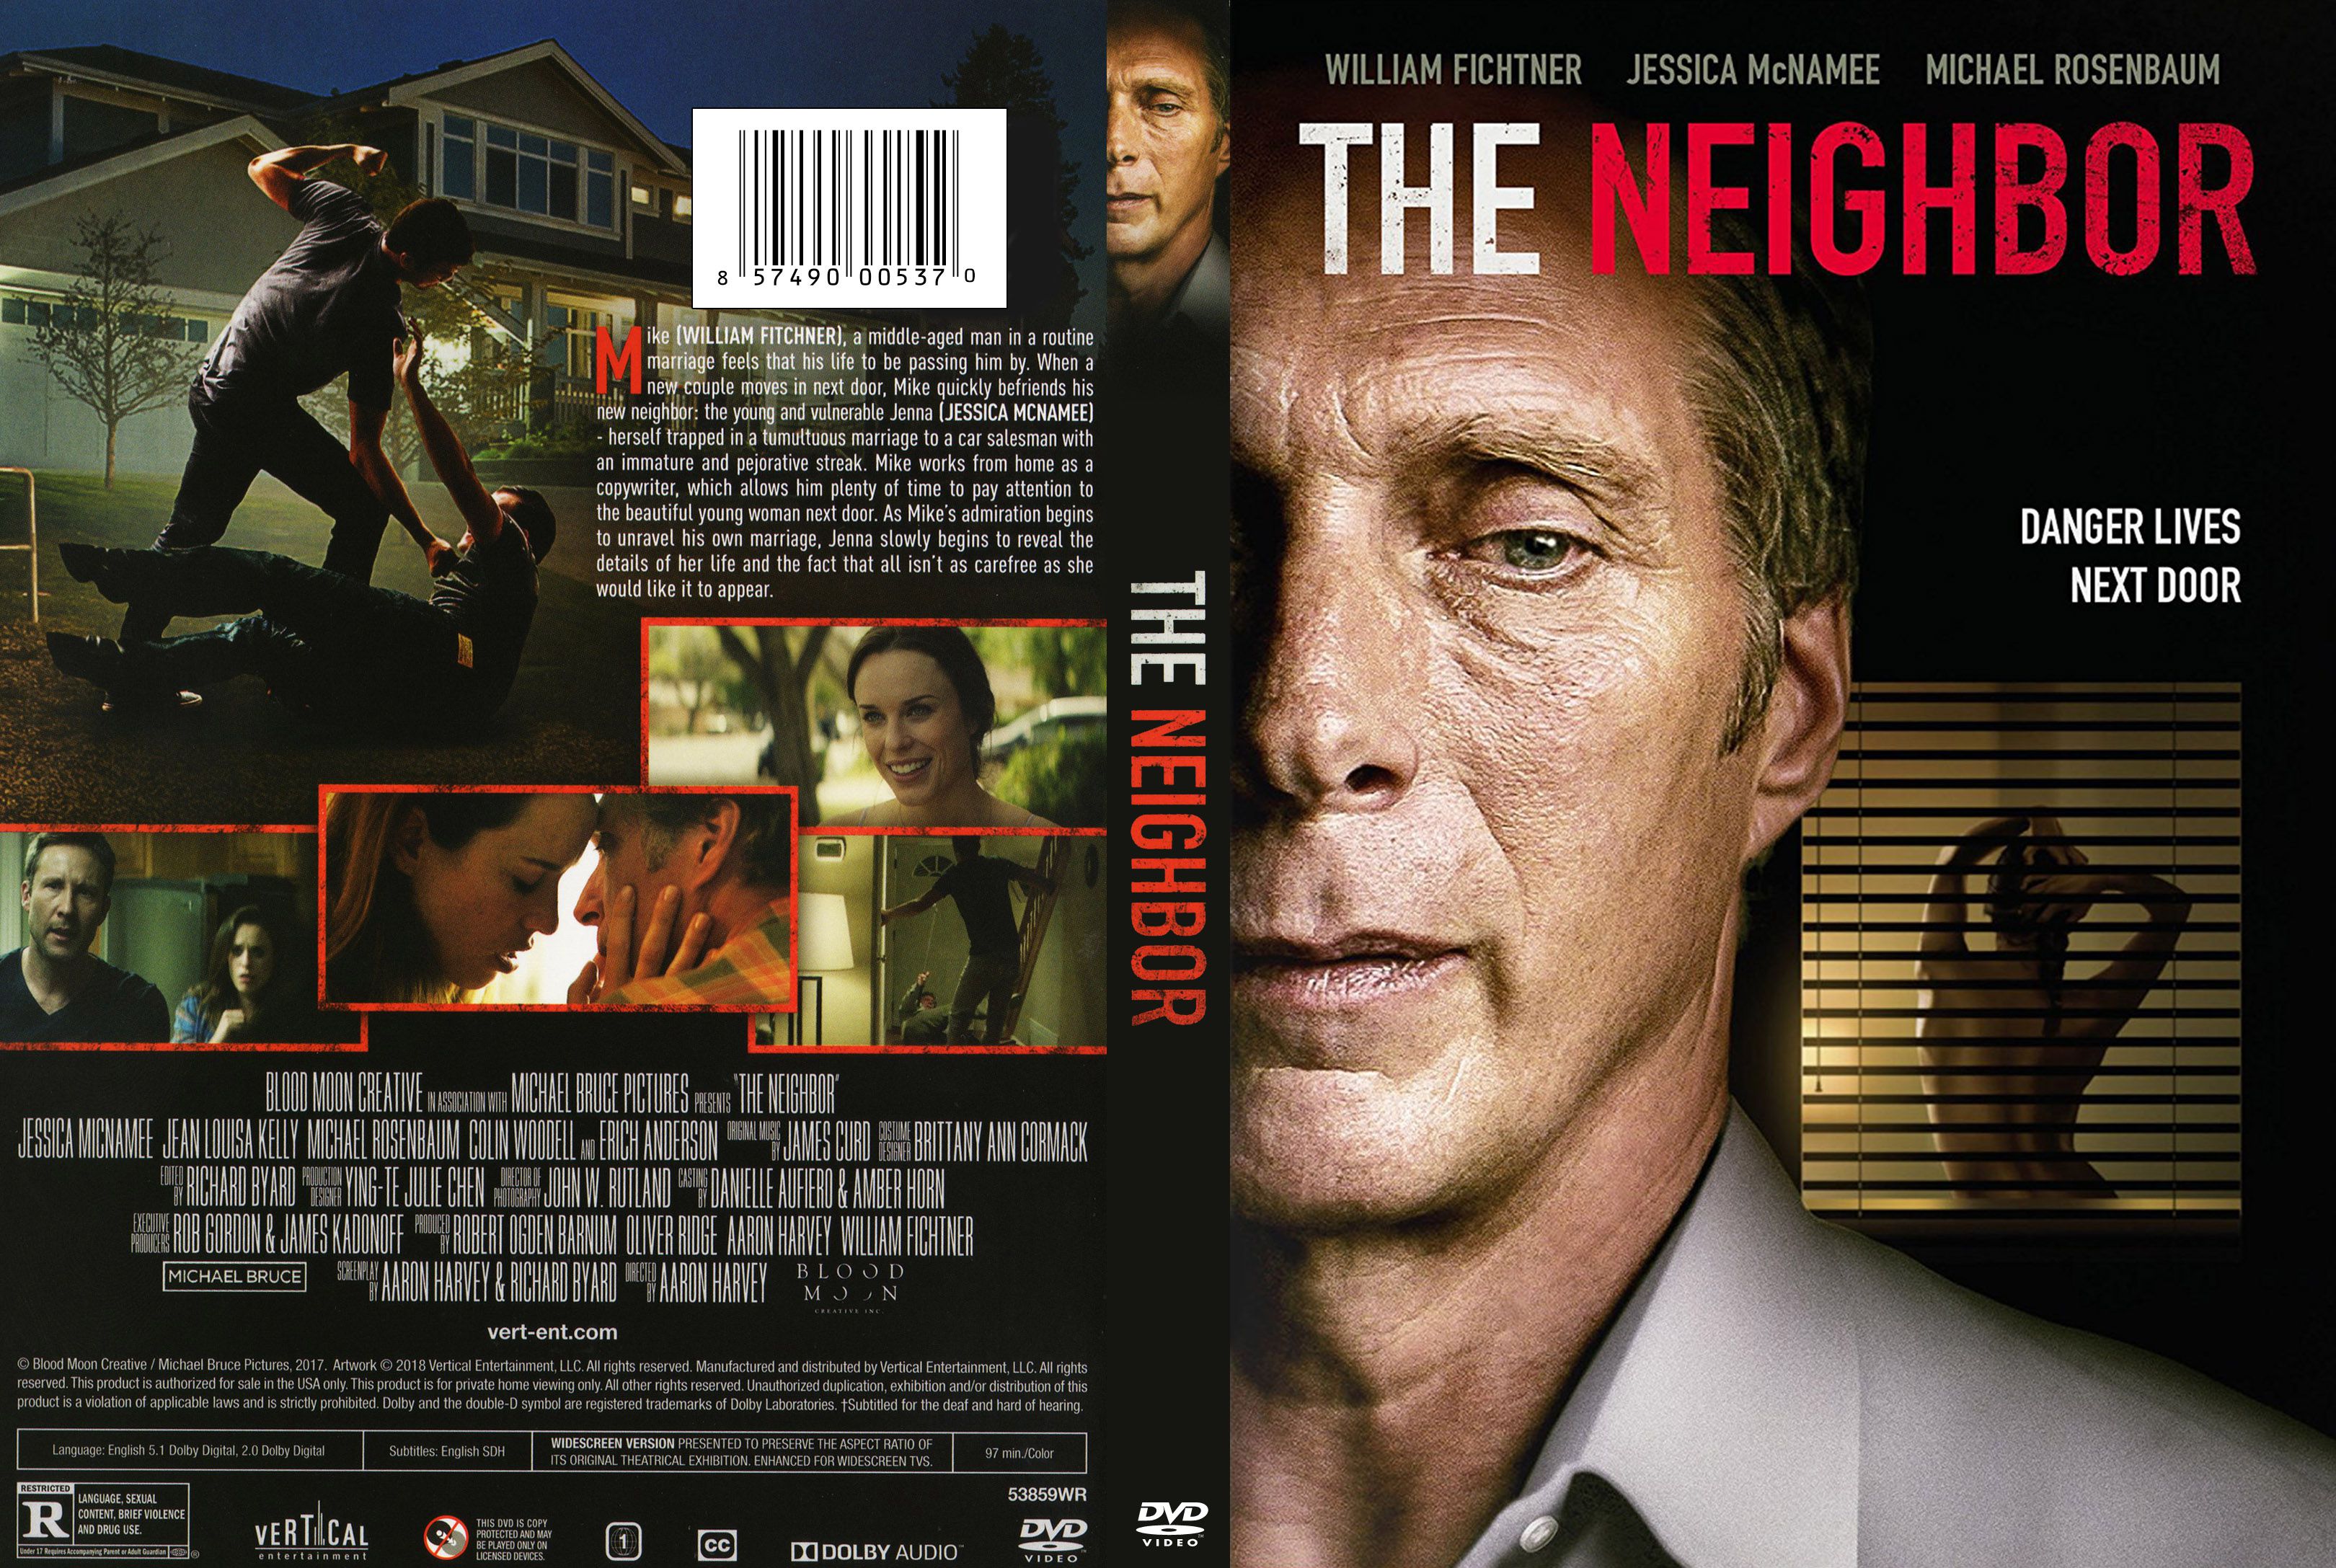 The Neighbor DVD Cover.